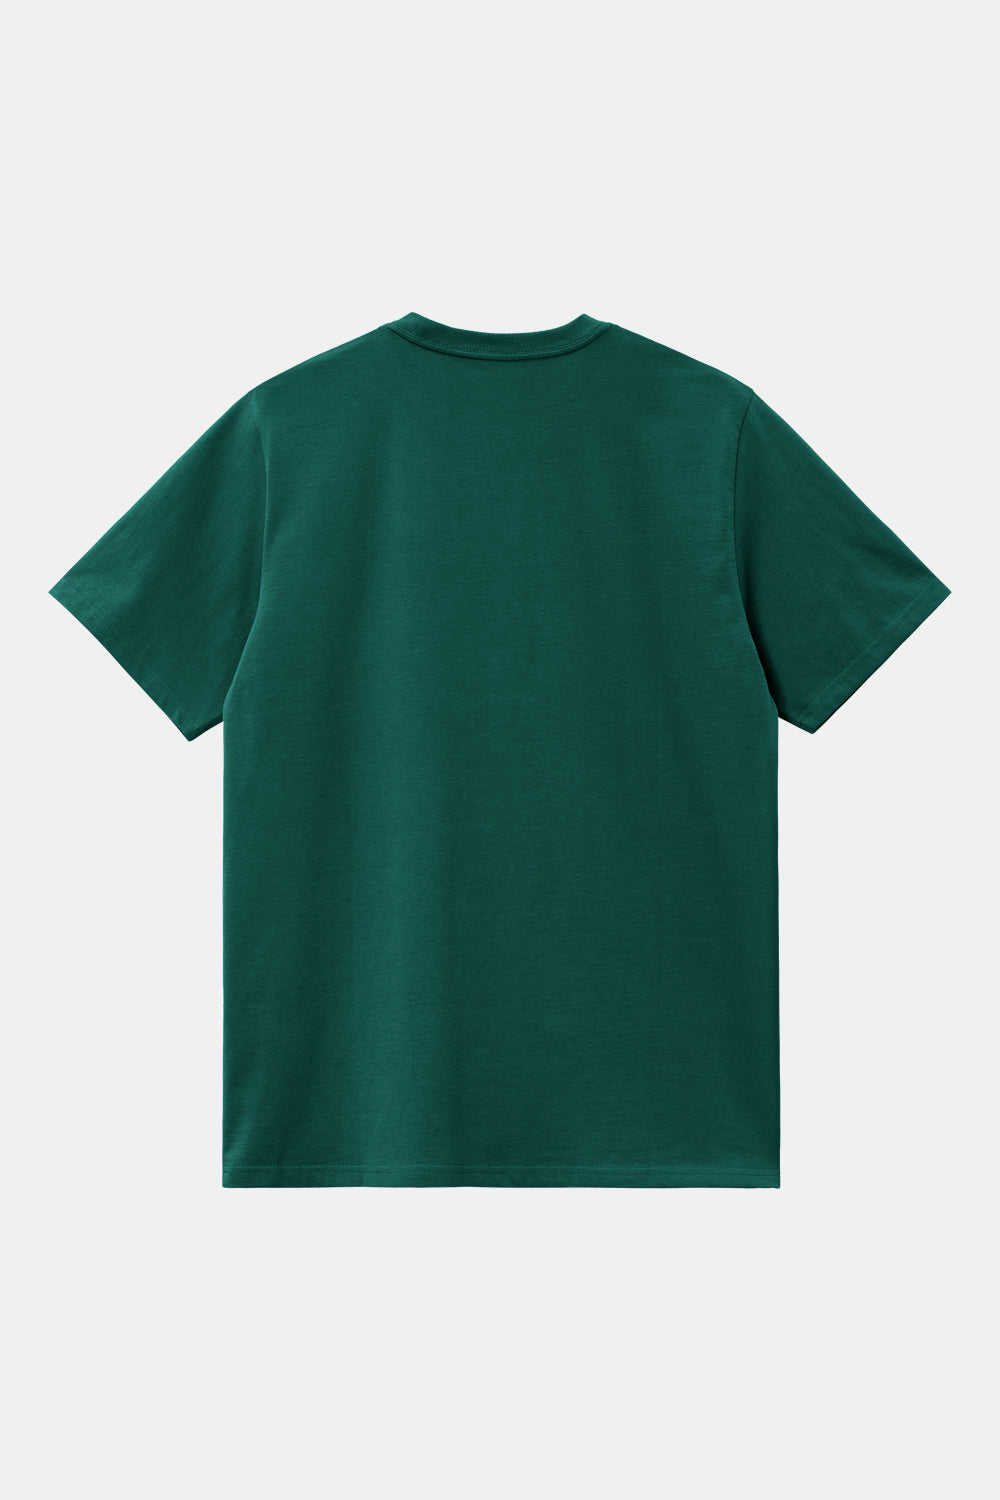 Carhartt WIP Short Sleeve Chase T-Shirt (Chervil/Gold)
